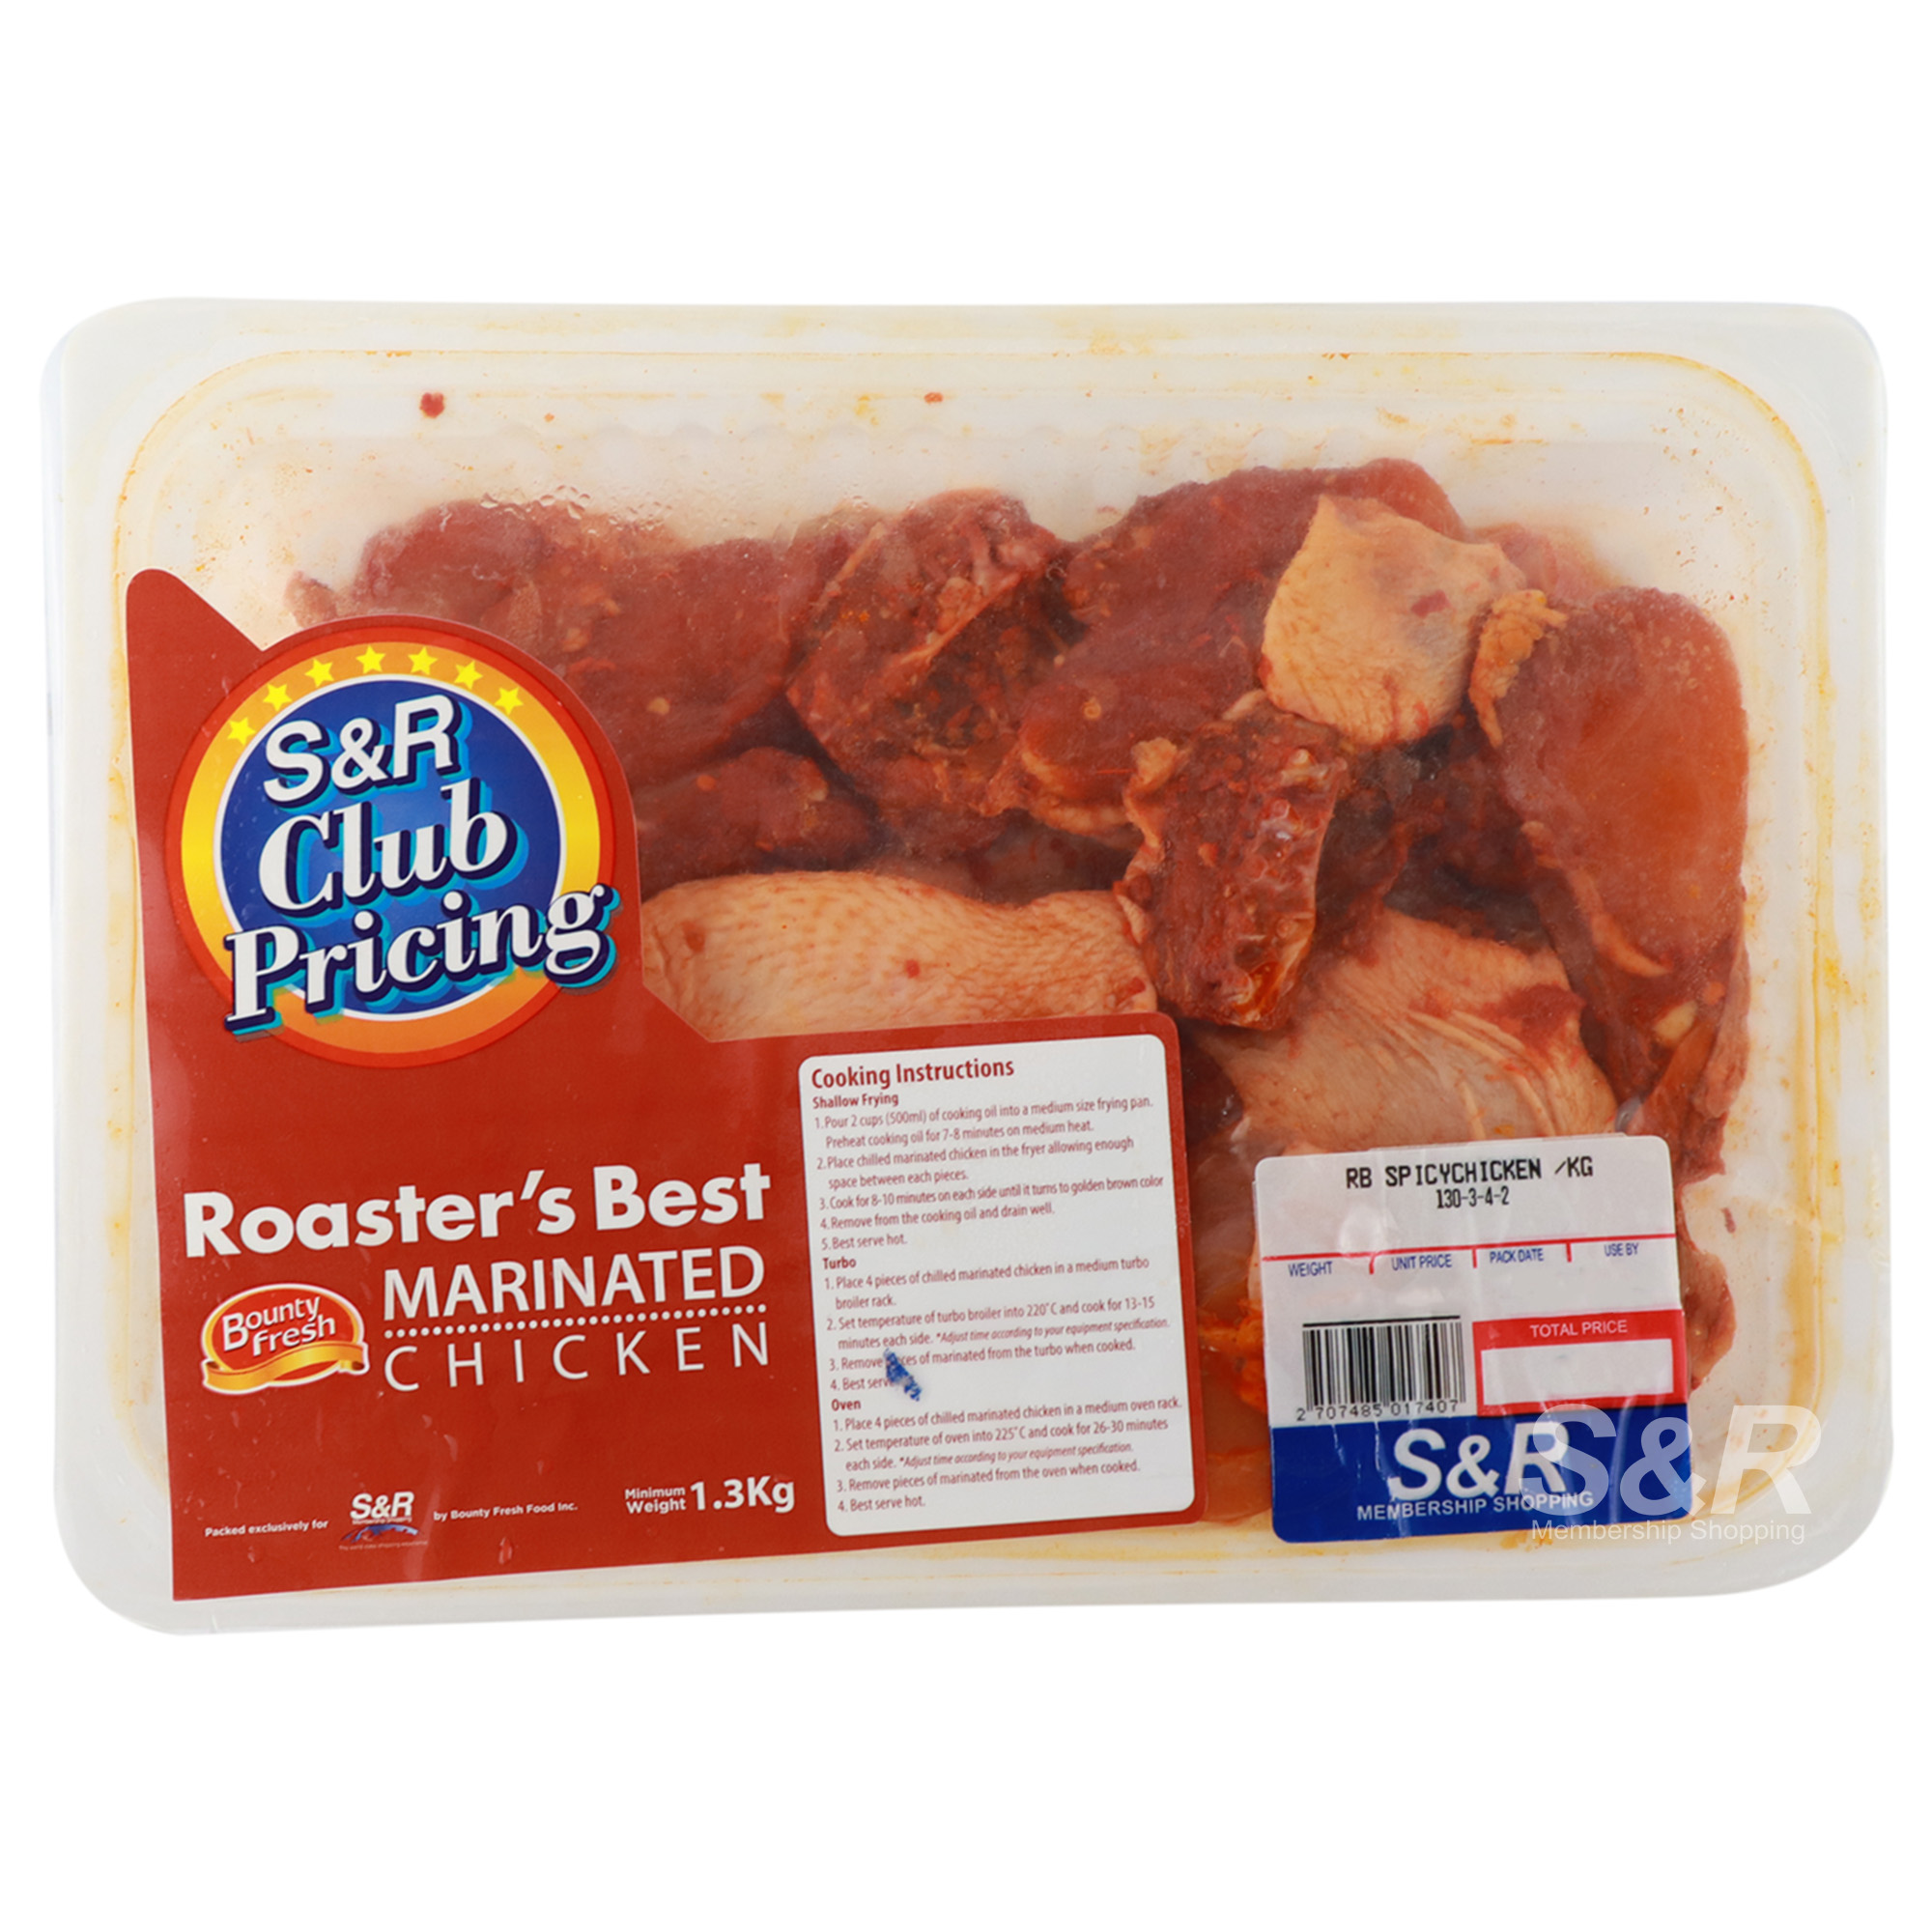 Roaster's Best Marinated Spicy Chicken Cut-ups approx. 2kg